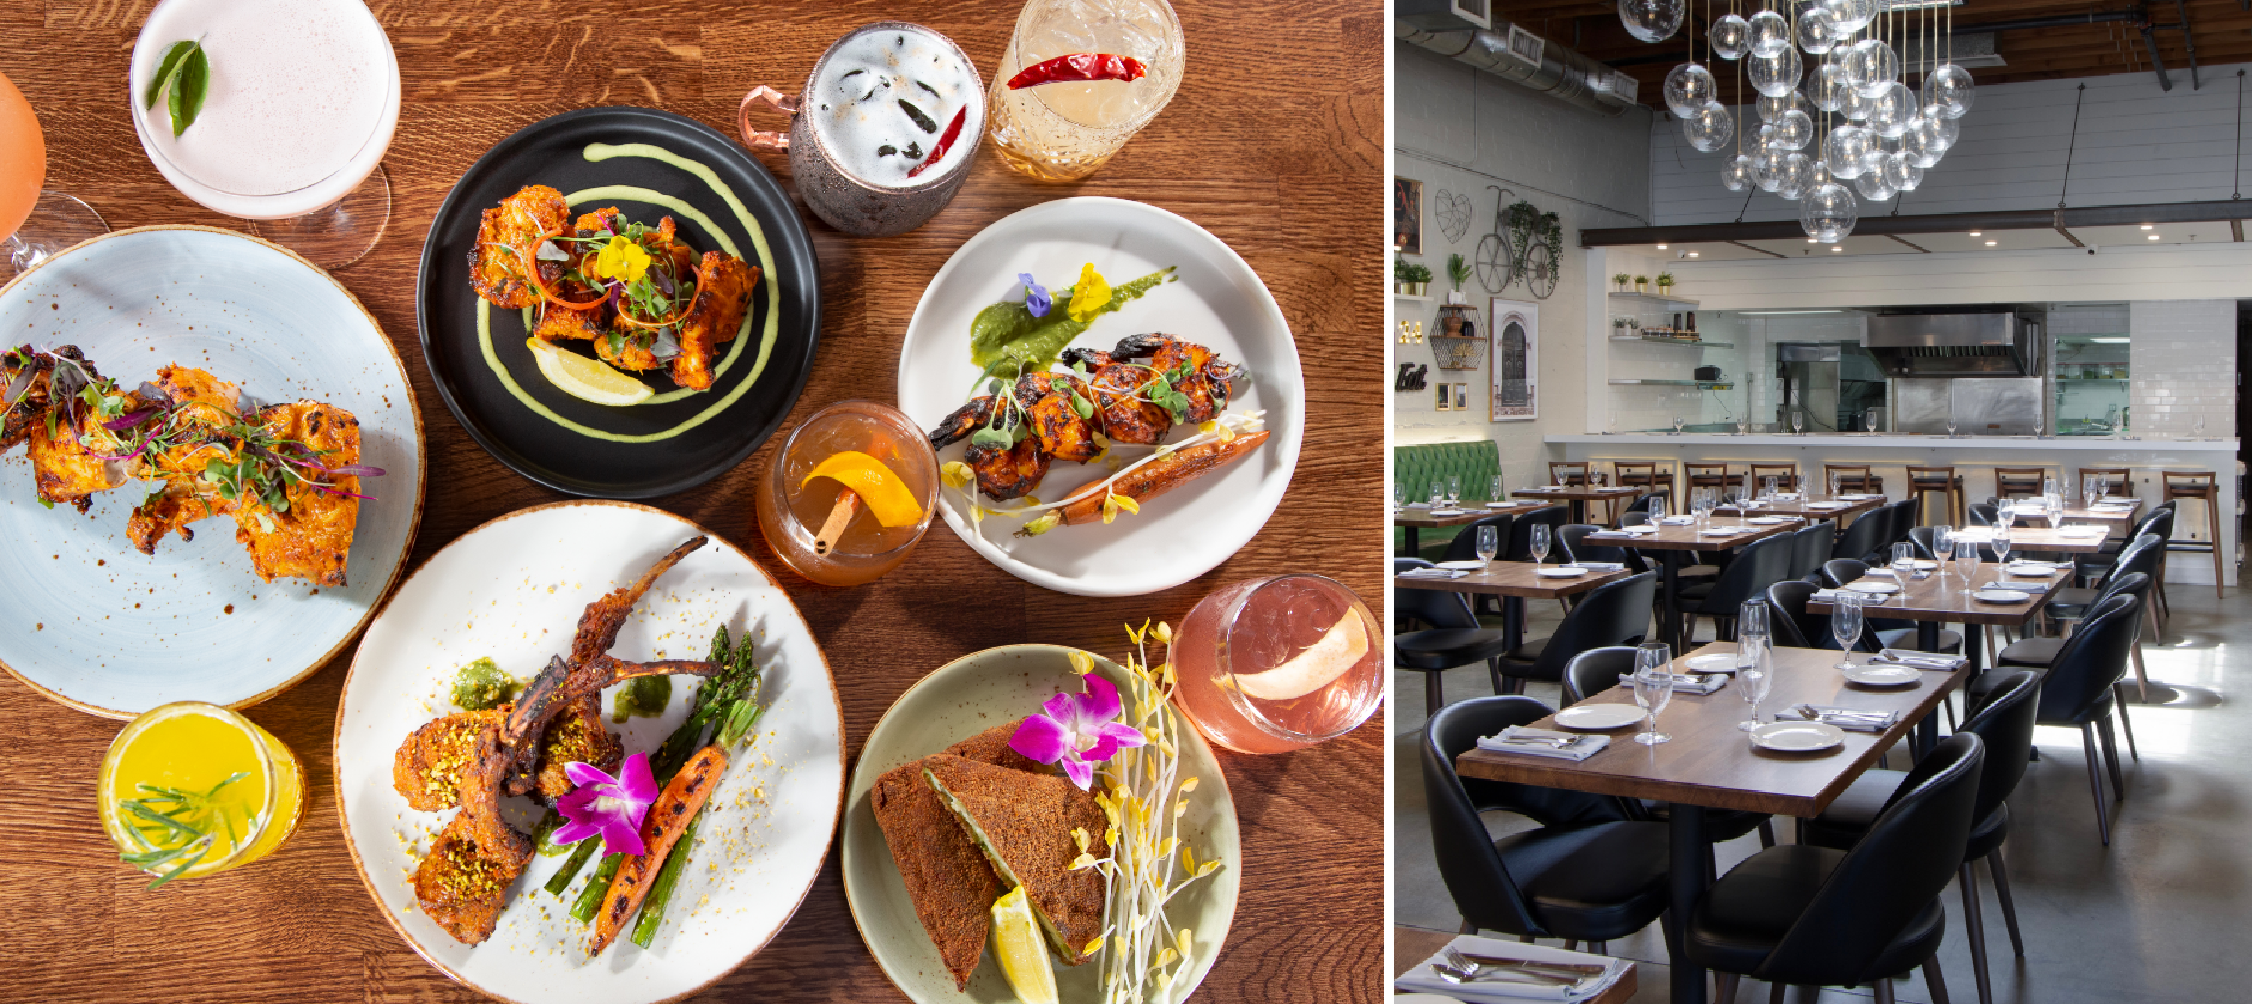 Arth Bar + Kitchen  brings modern Indian cuisine to Culver City